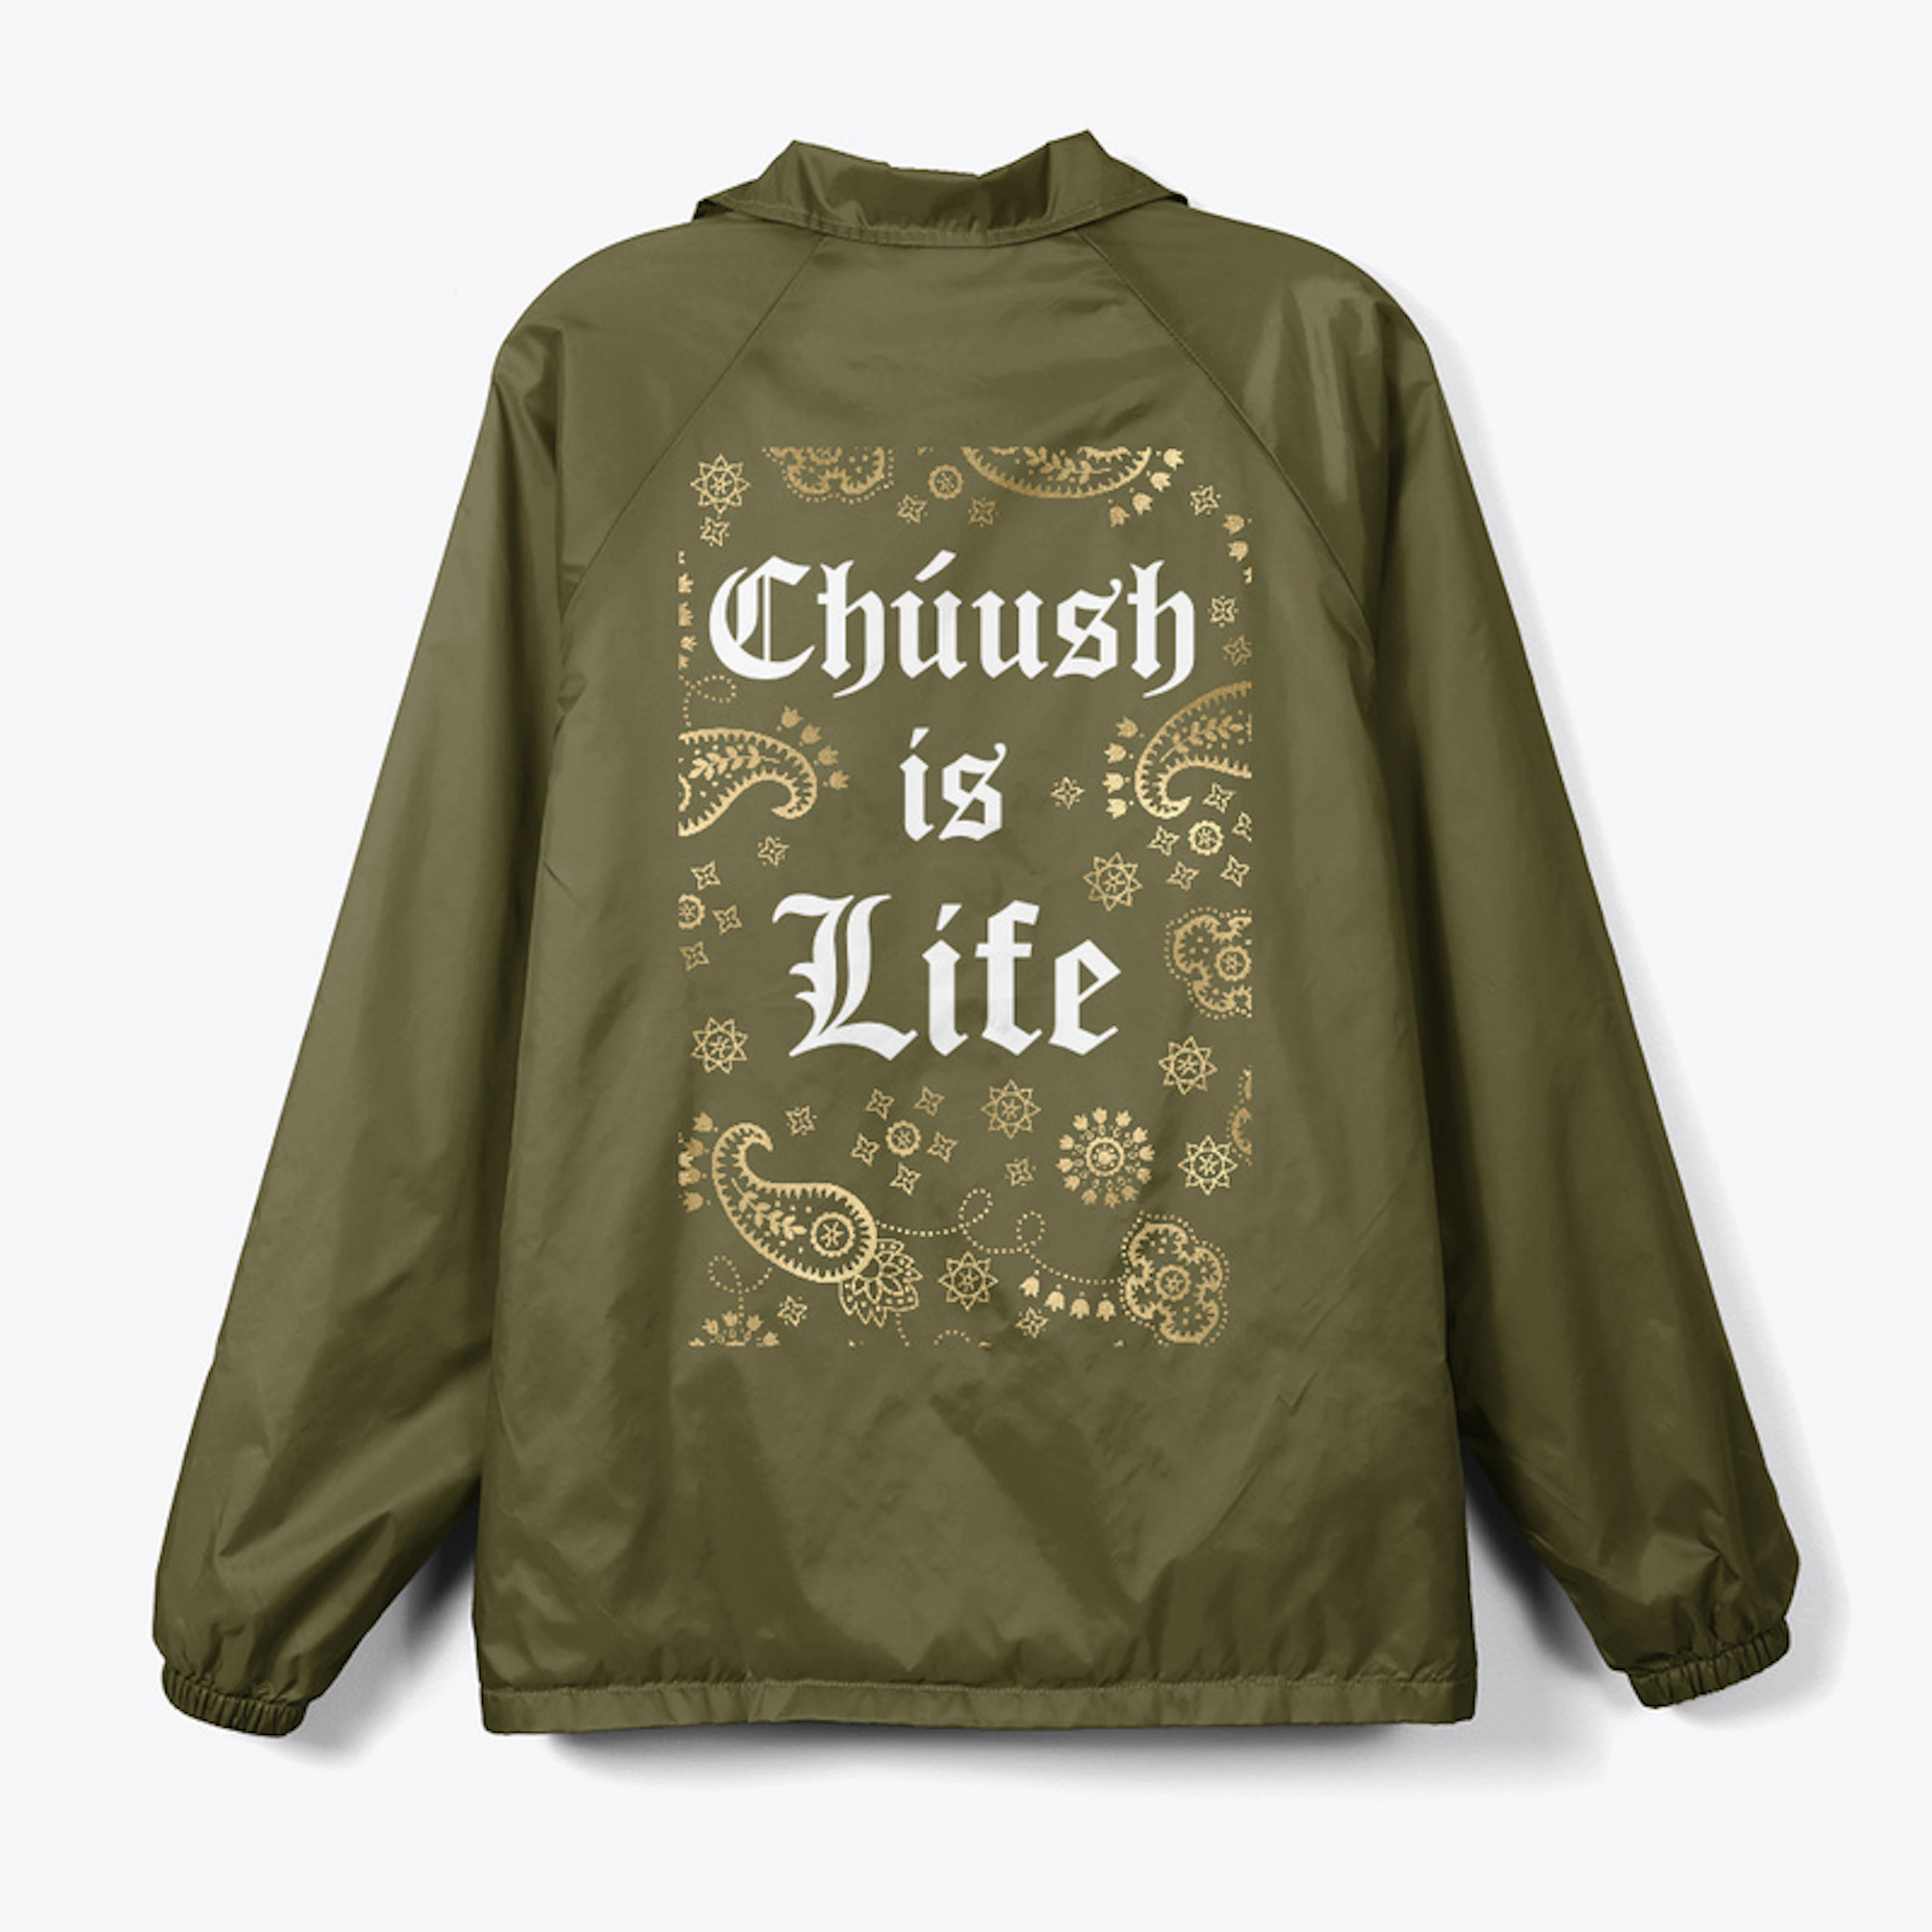 Chúush is Life Jacket (Multi Colors)